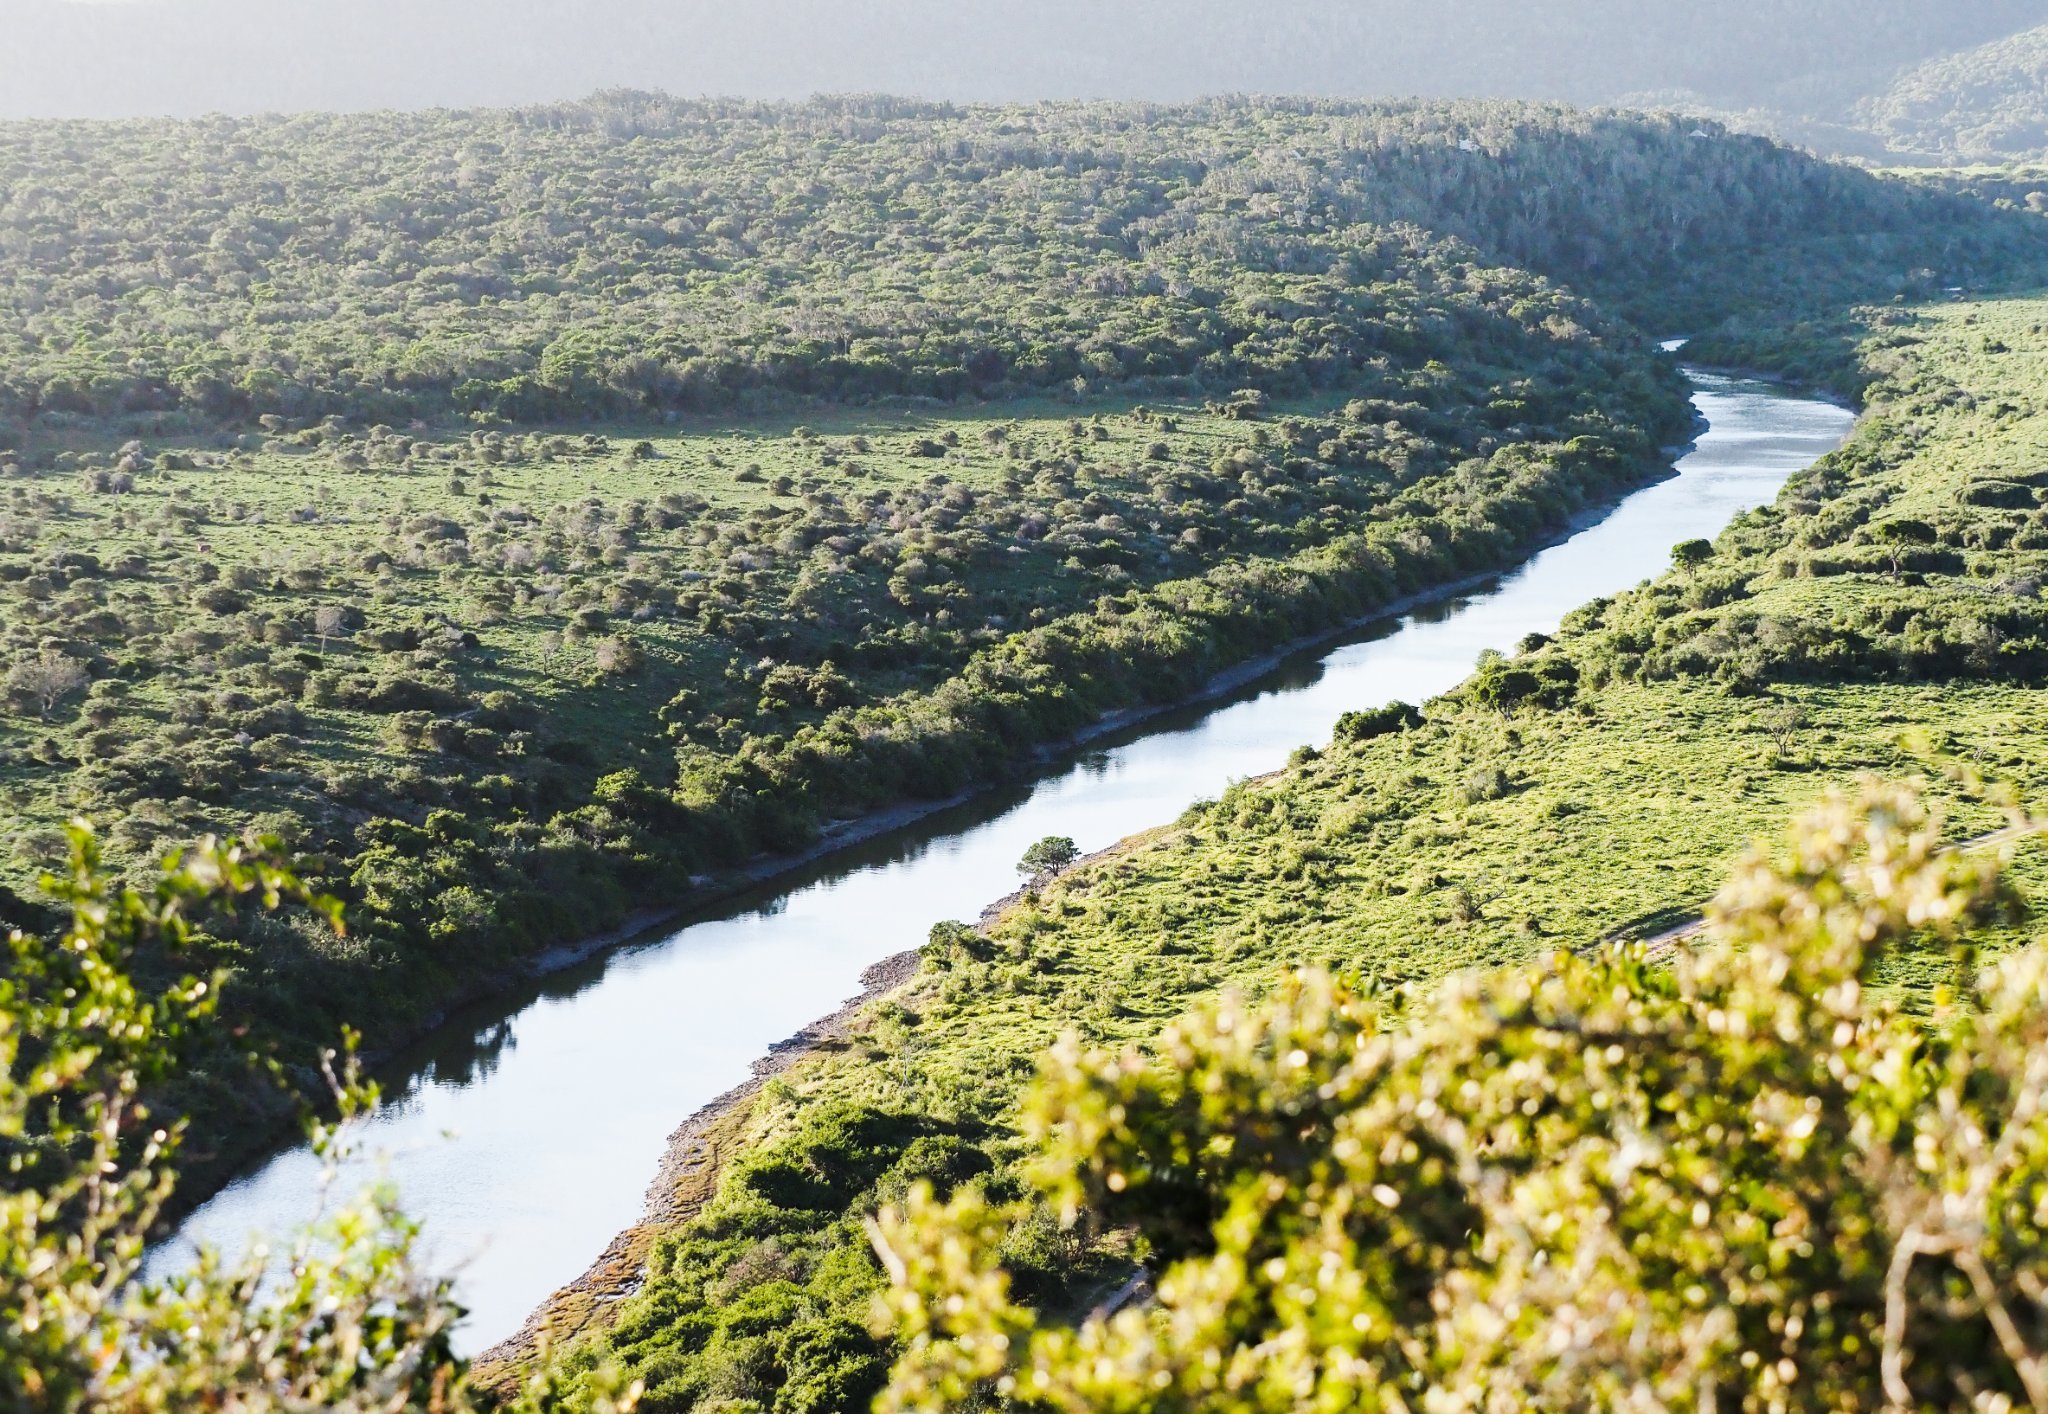 The Bushmans River running through Kariega by Trish Liggett